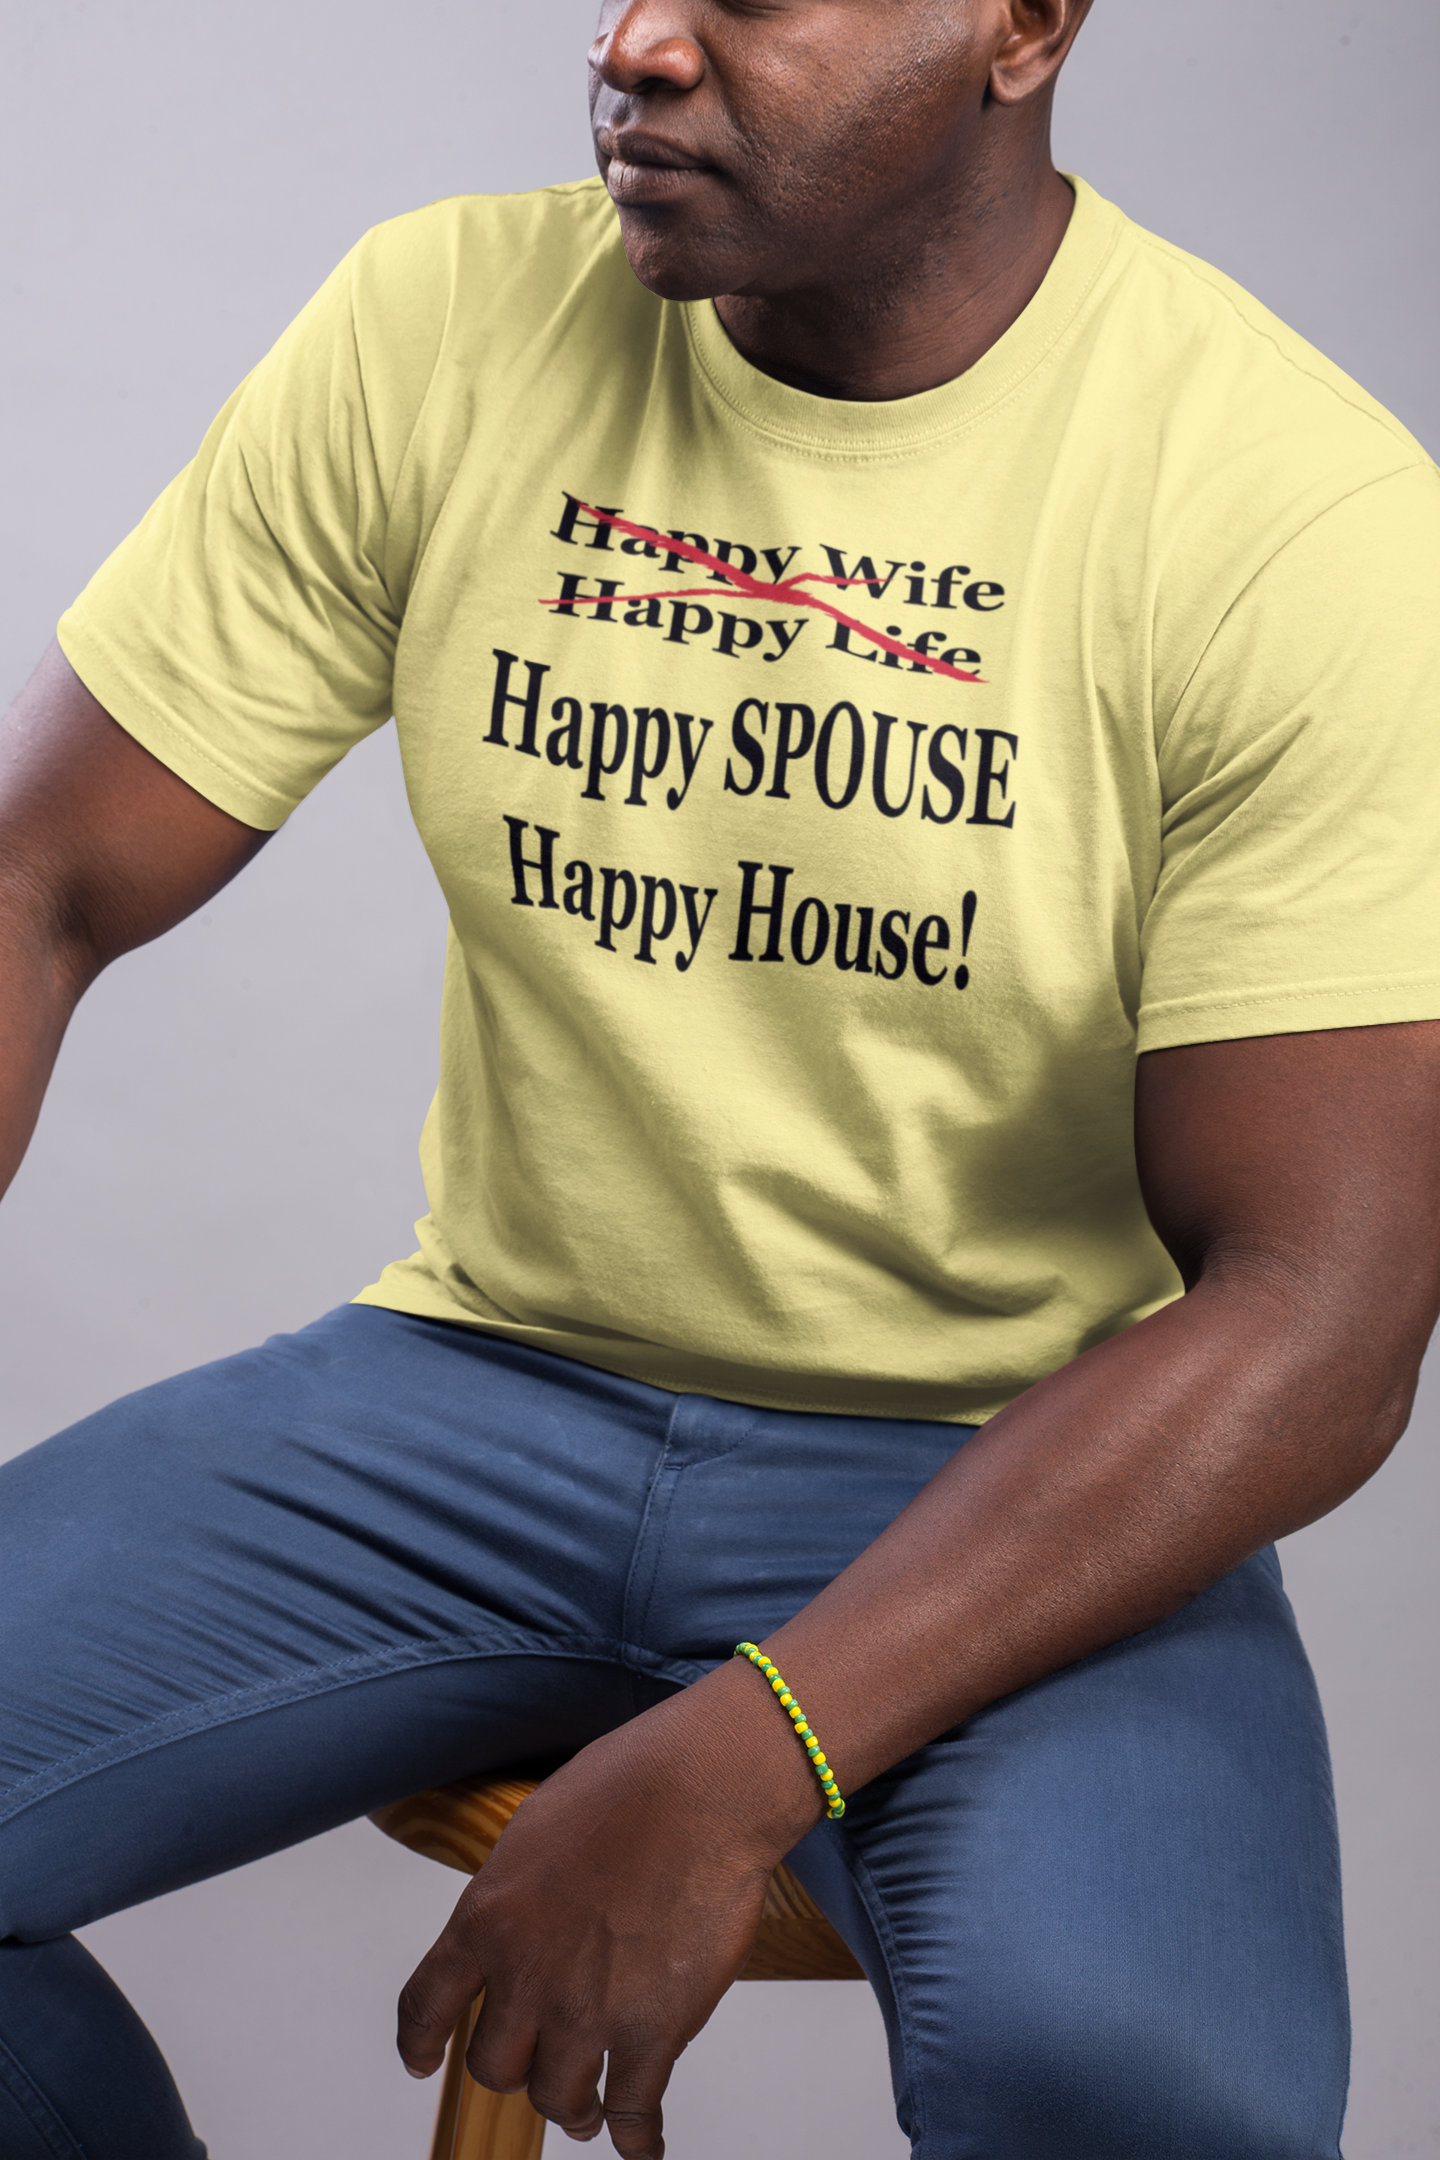 The Happy House Tee